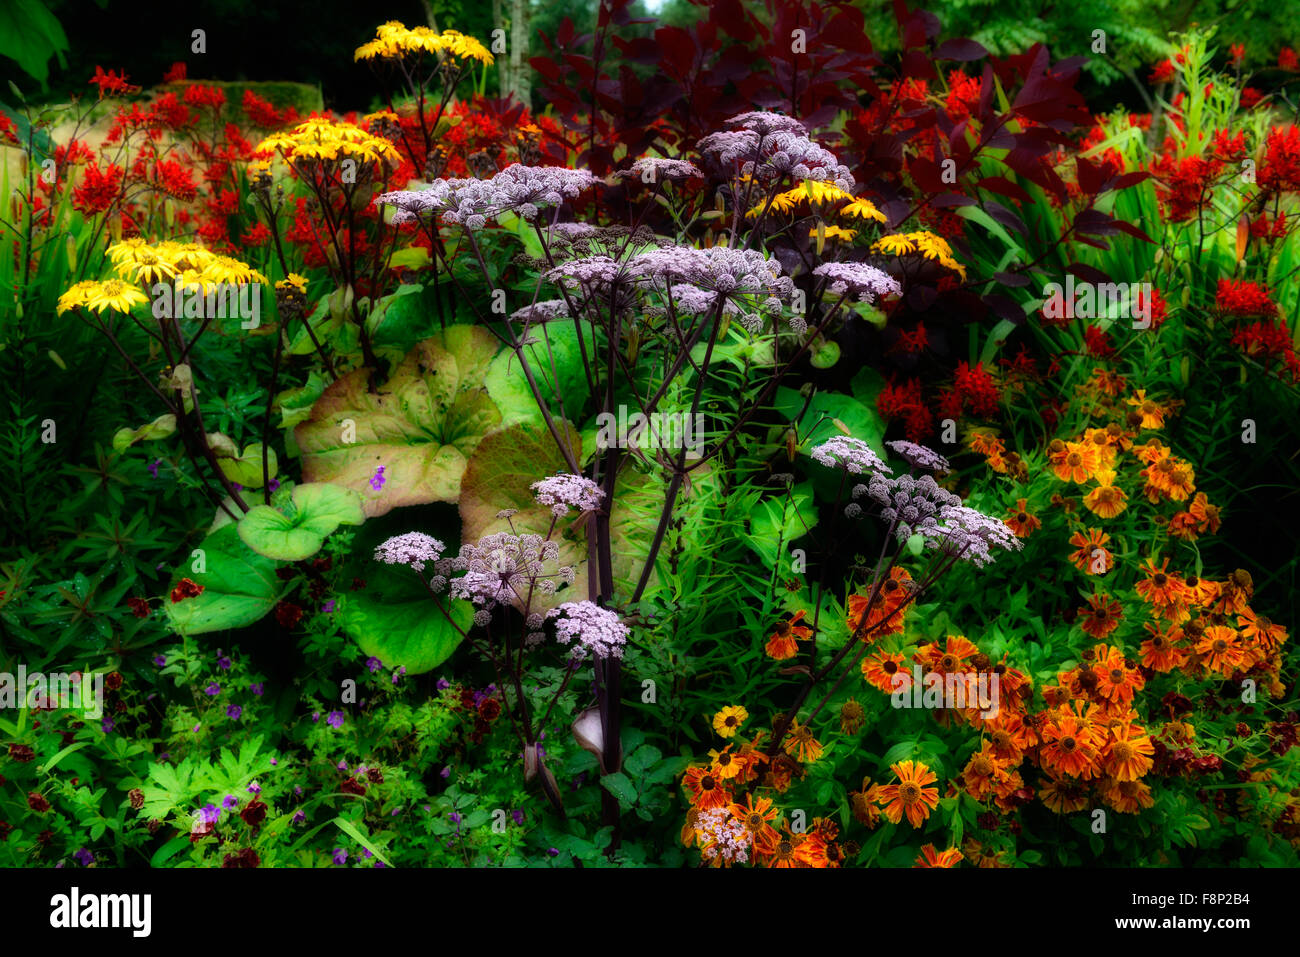 Angélica umbellifer helenium ligularia crocosmia cama caliente frontera pantalla mixta mezcla de verano flores perennes florales RM Foto de stock